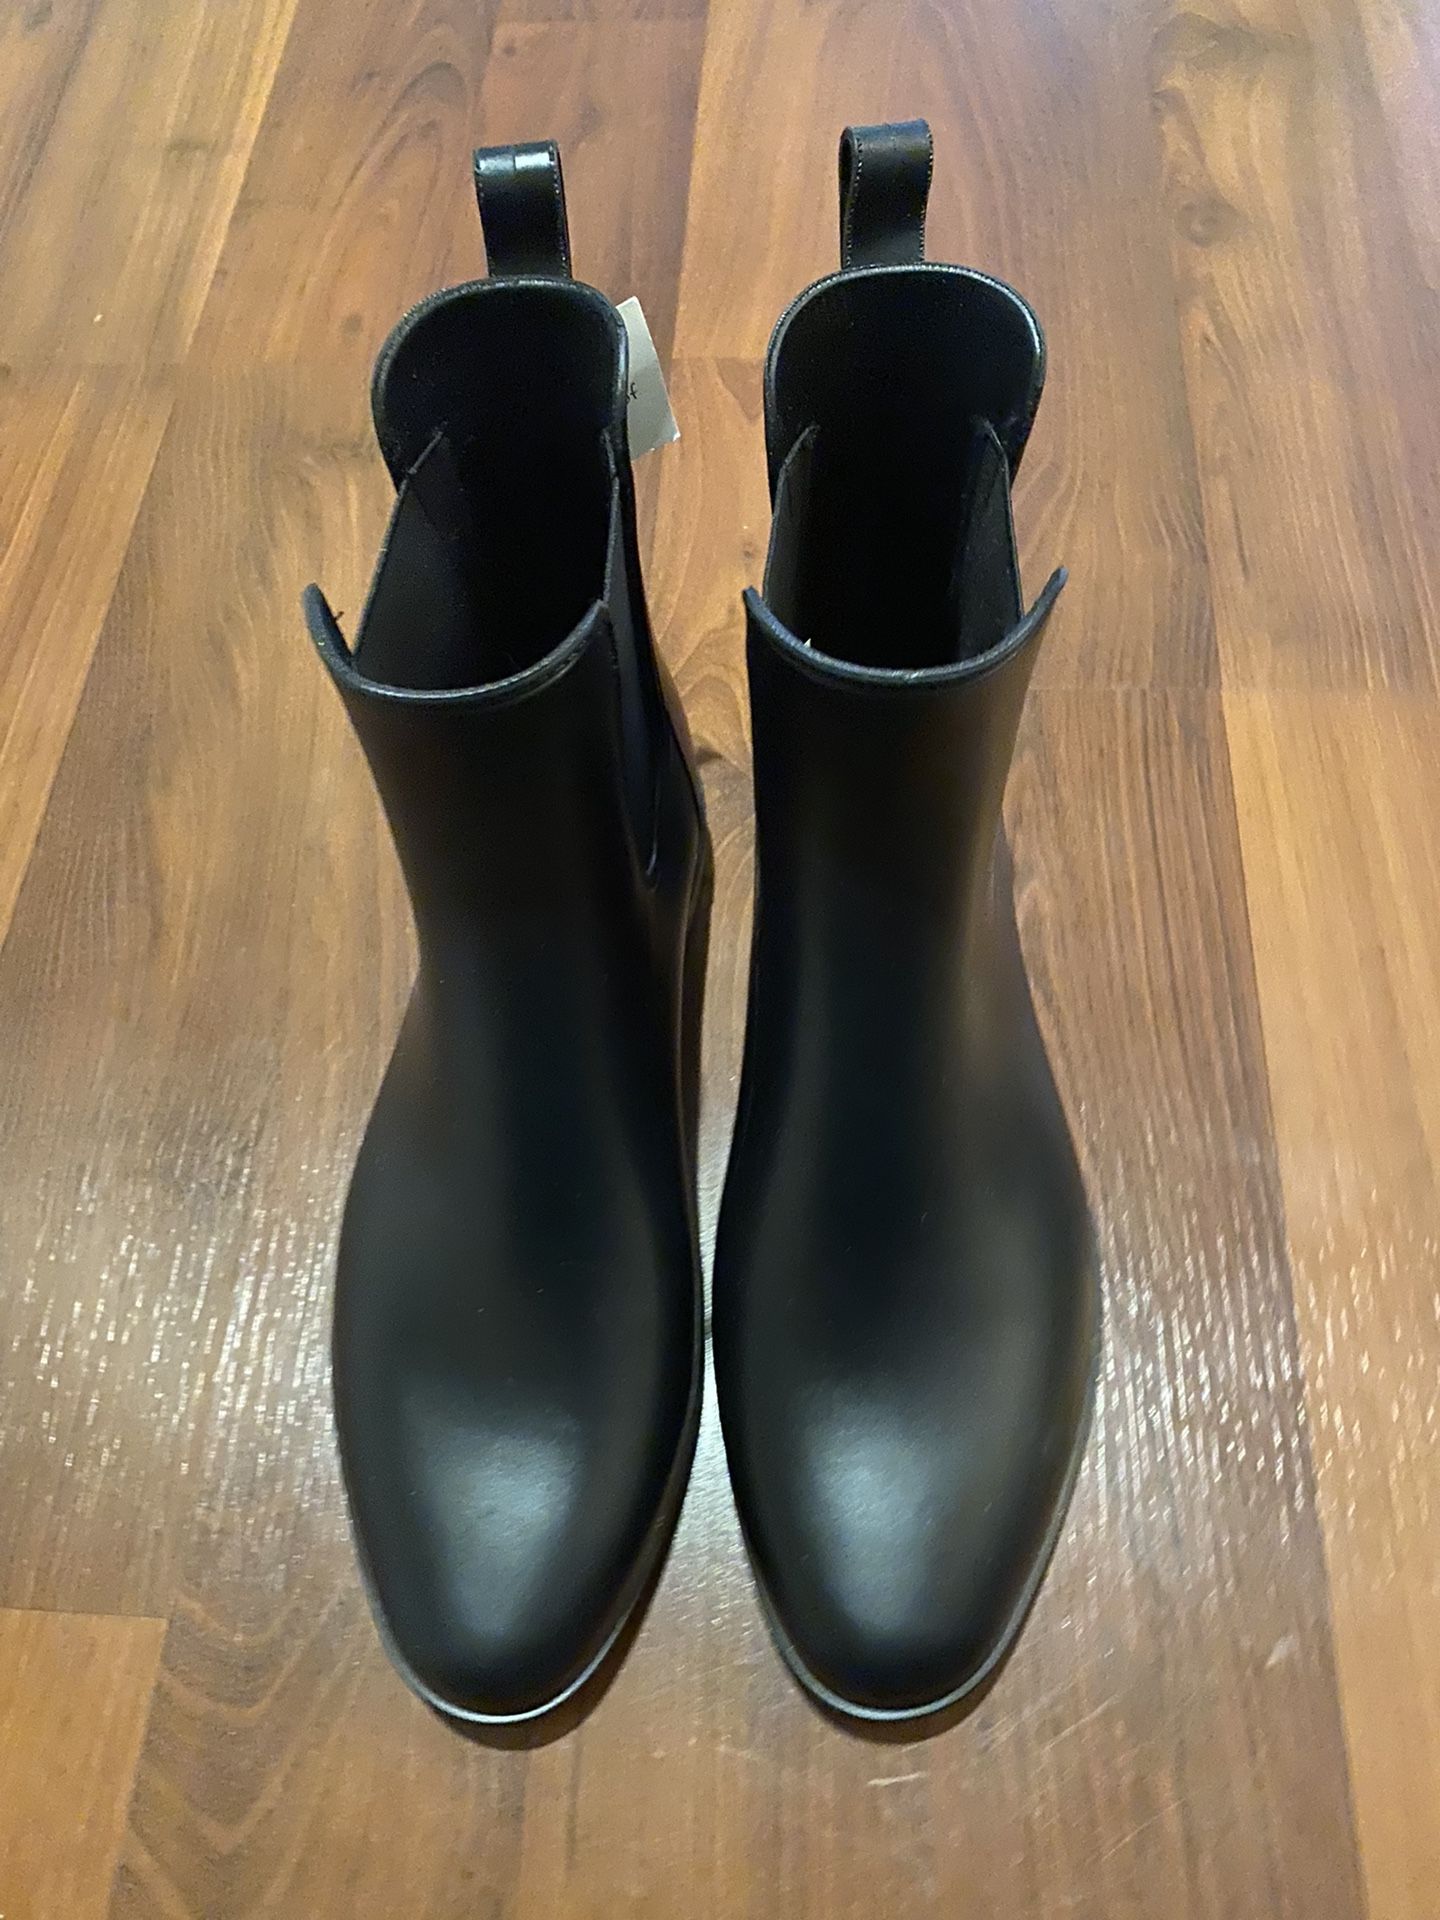 Waterproof Rain Boots